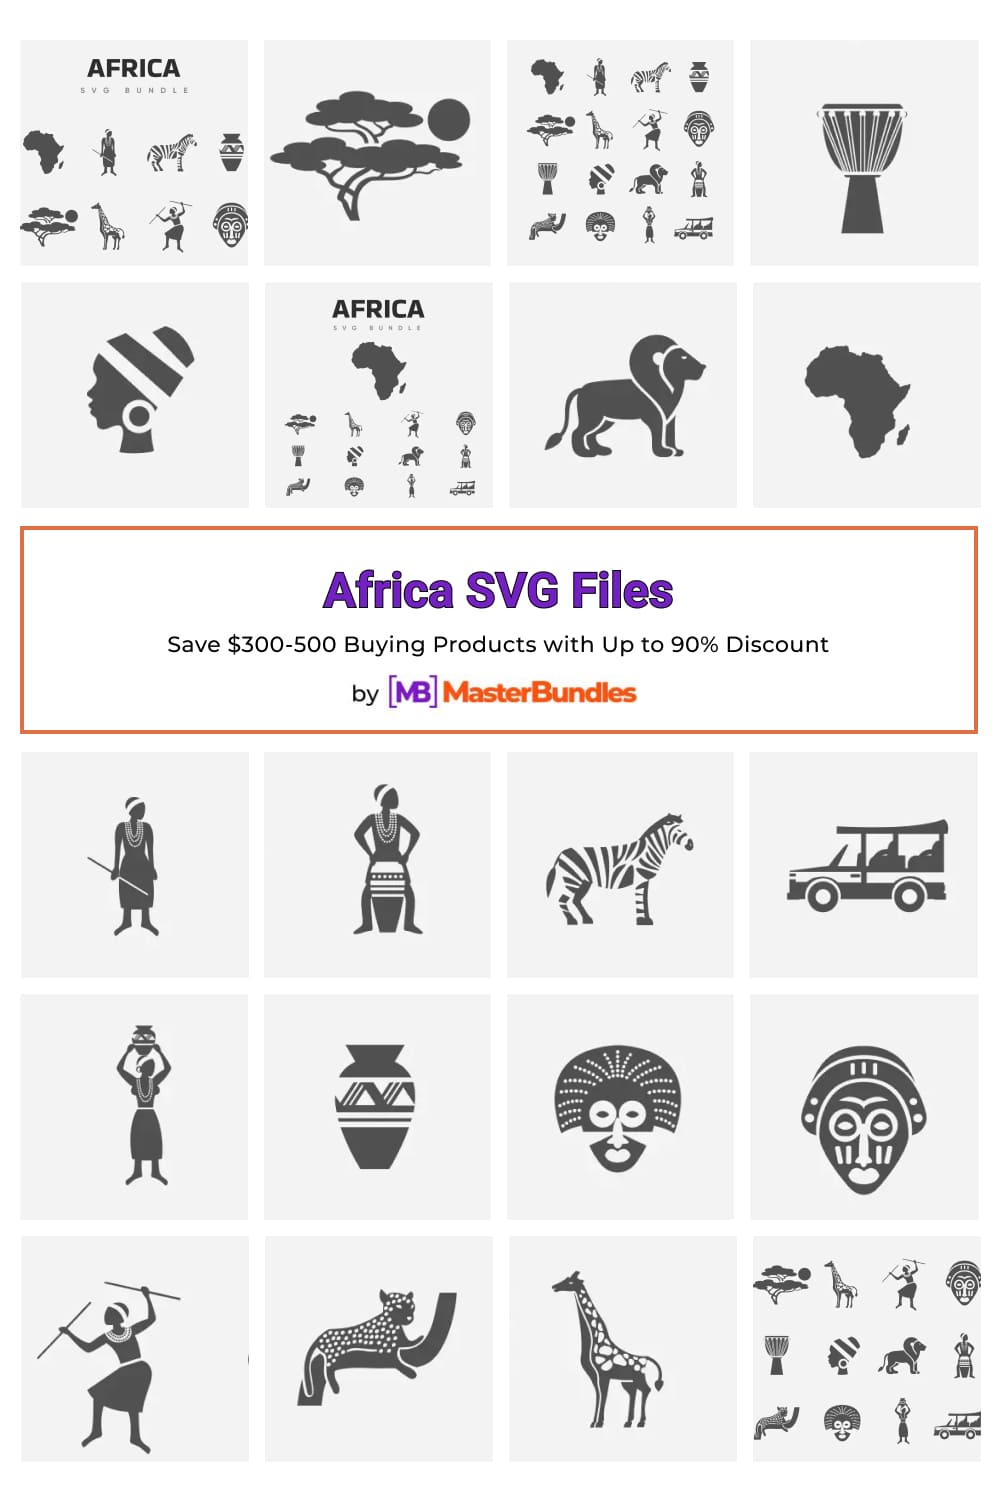 Africa SVG Files for pinterest.